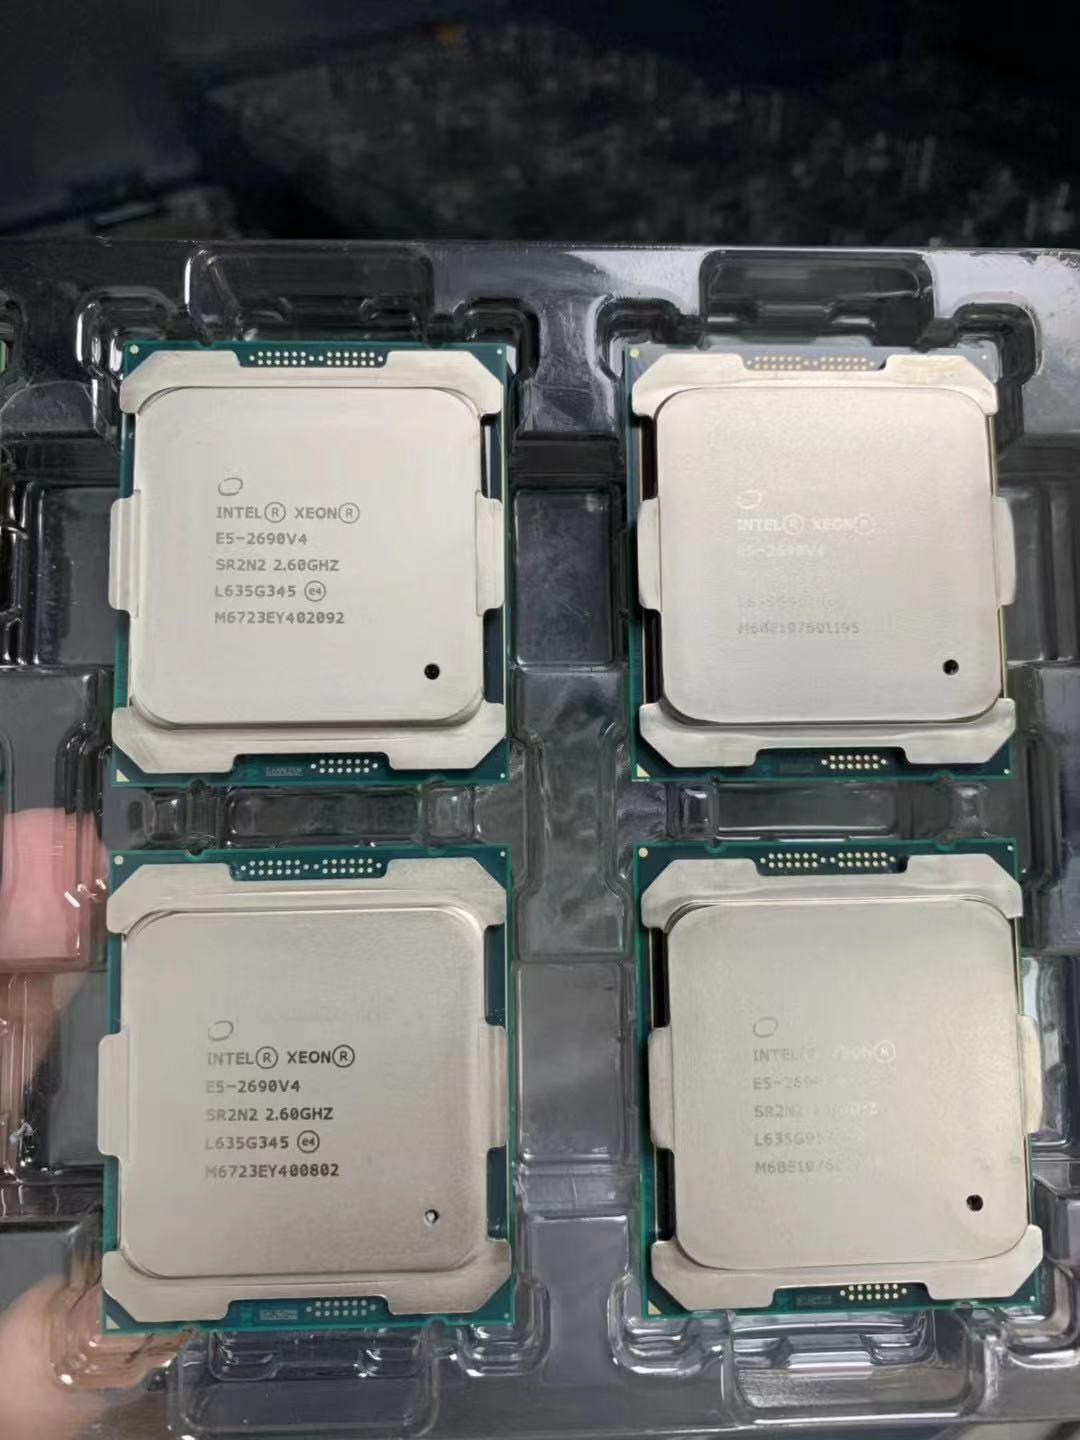 Intel Xeon e5-2690 v4 CPU processor 2.60 GHz 14-Core sr2n2 lga2011-v3 x99 server